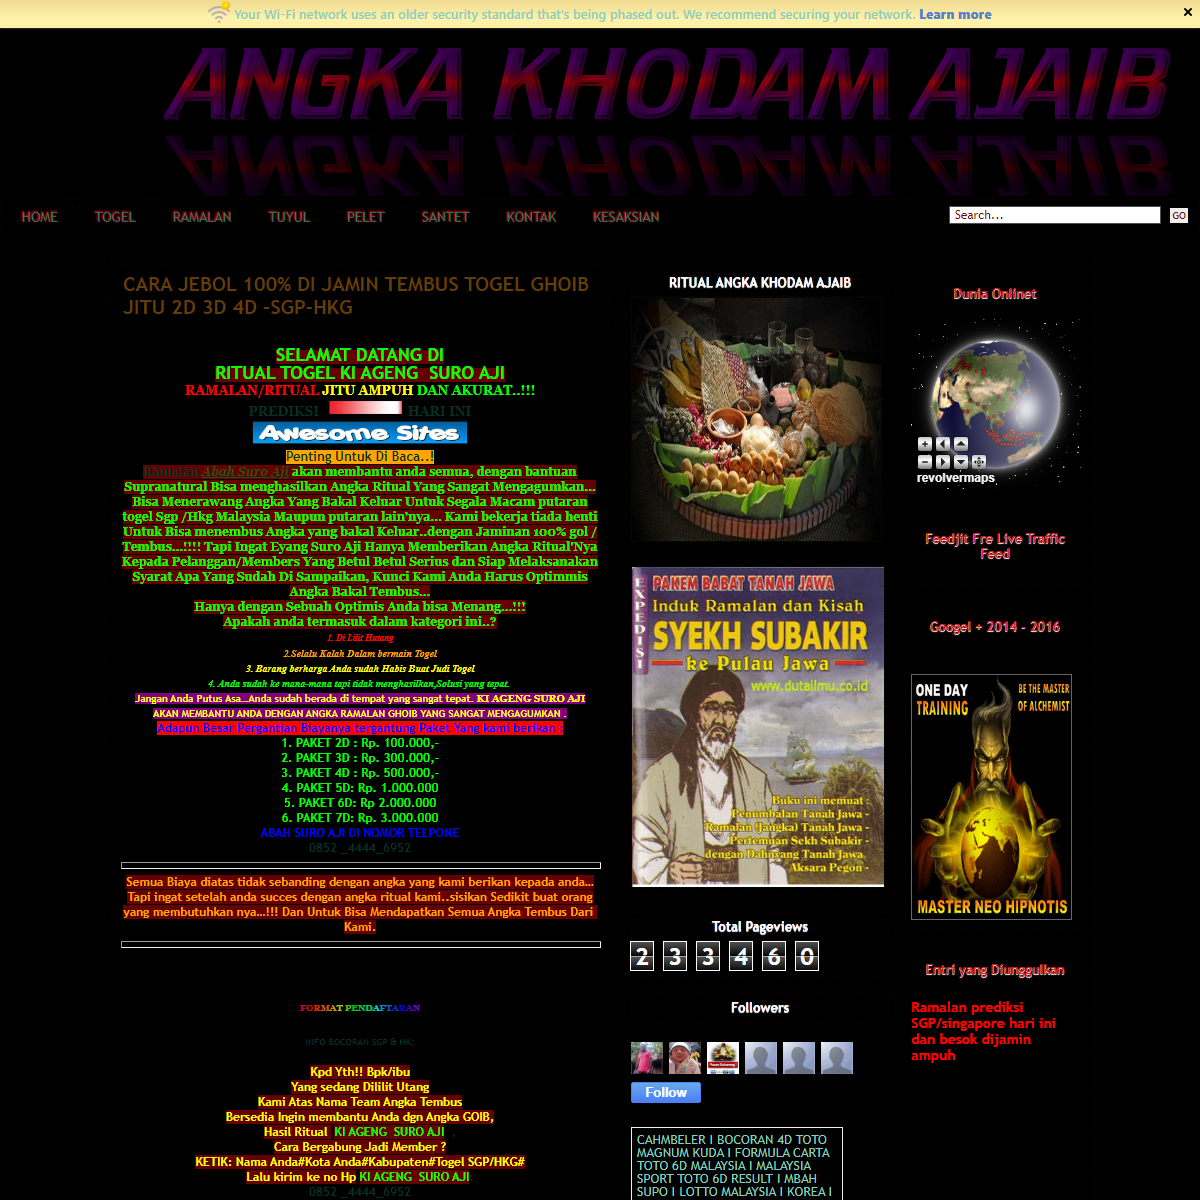 A complete backup of https://ahlimbatoogeljitu.blogspot.com/2014/10/prediksi-togel-singapura-kamis-23.html